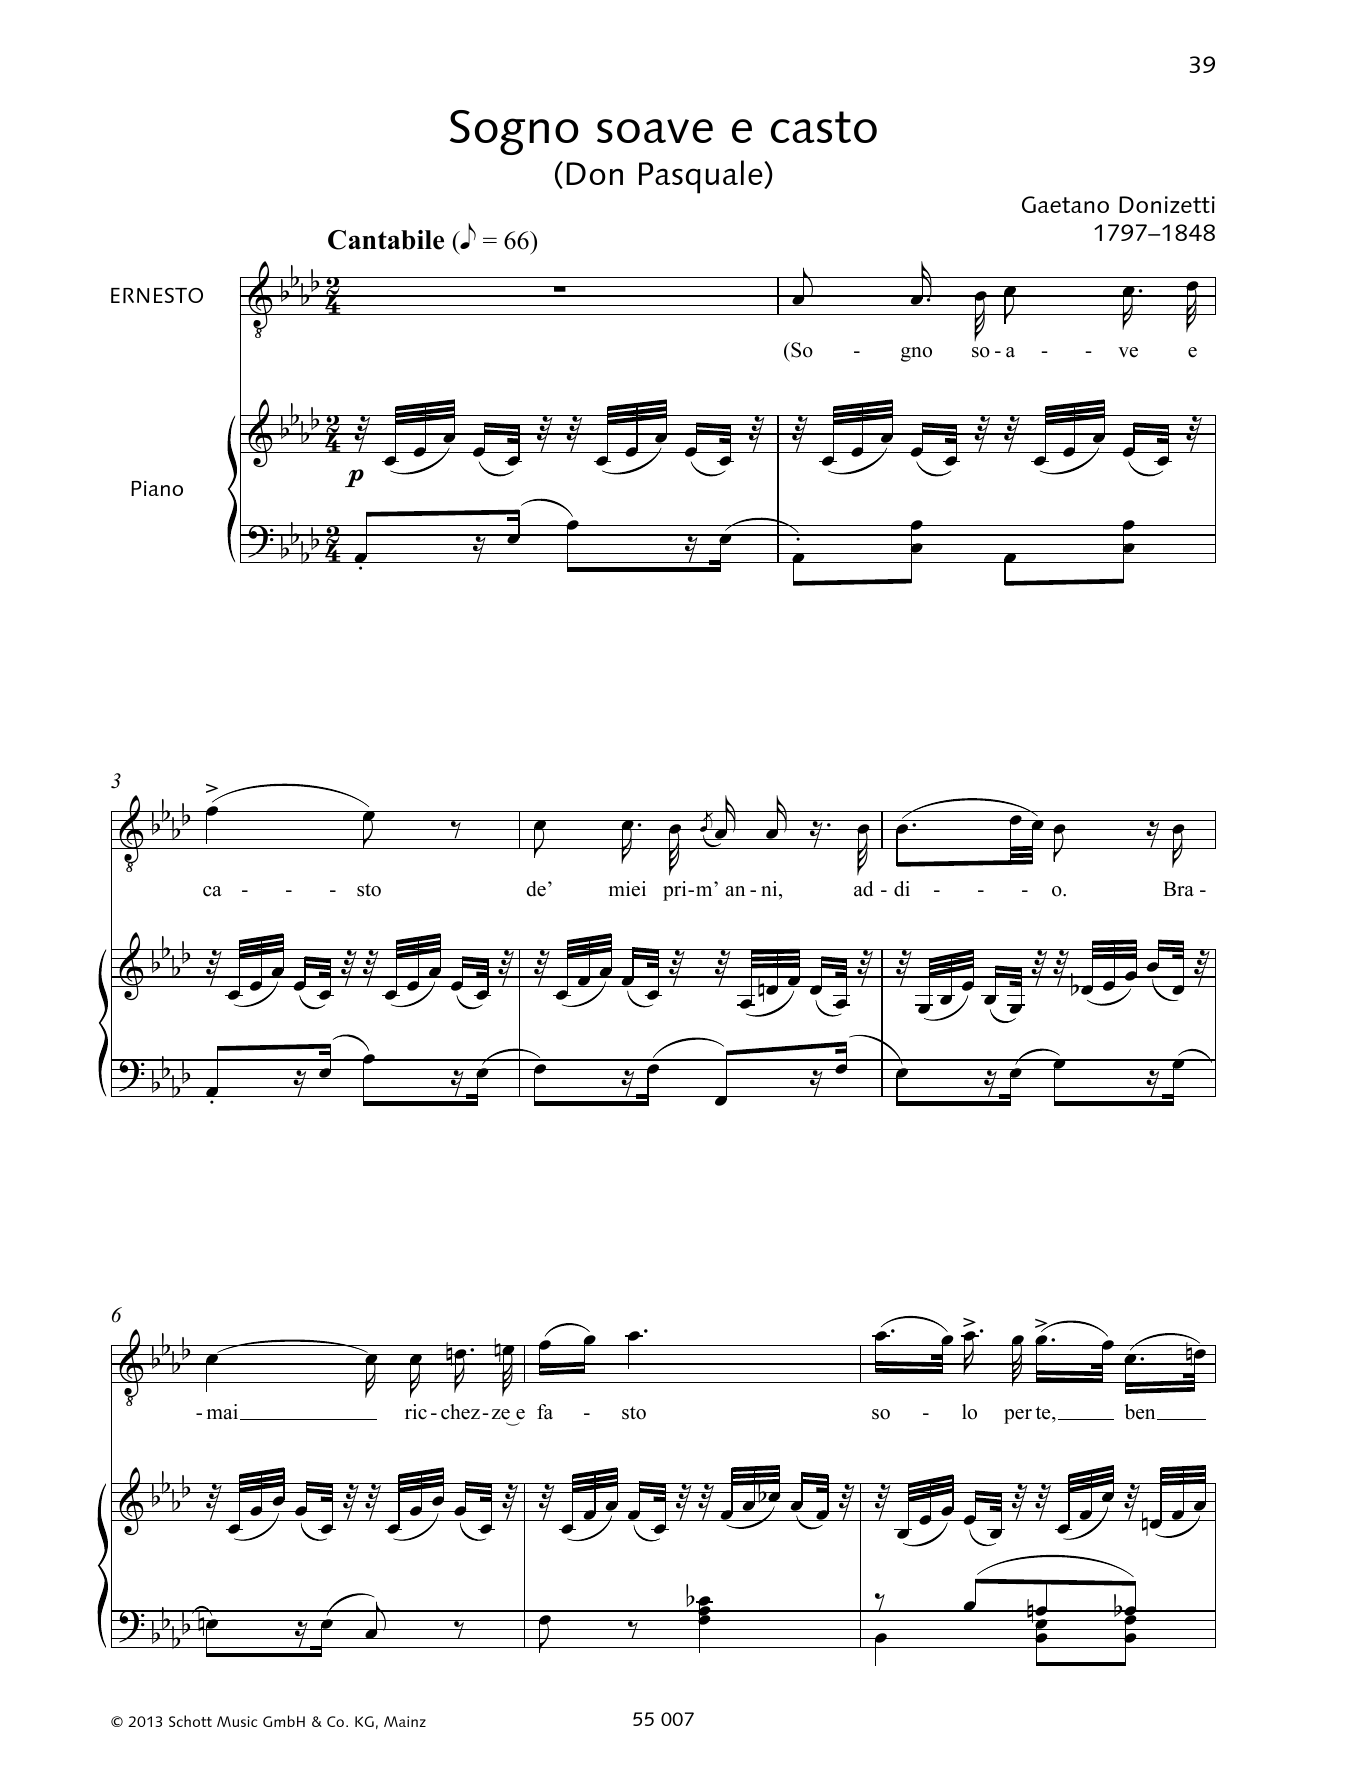 Download Francesca Licciarda Sogno soave e casto Sheet Music and learn how to play Piano & Vocal PDF digital score in minutes